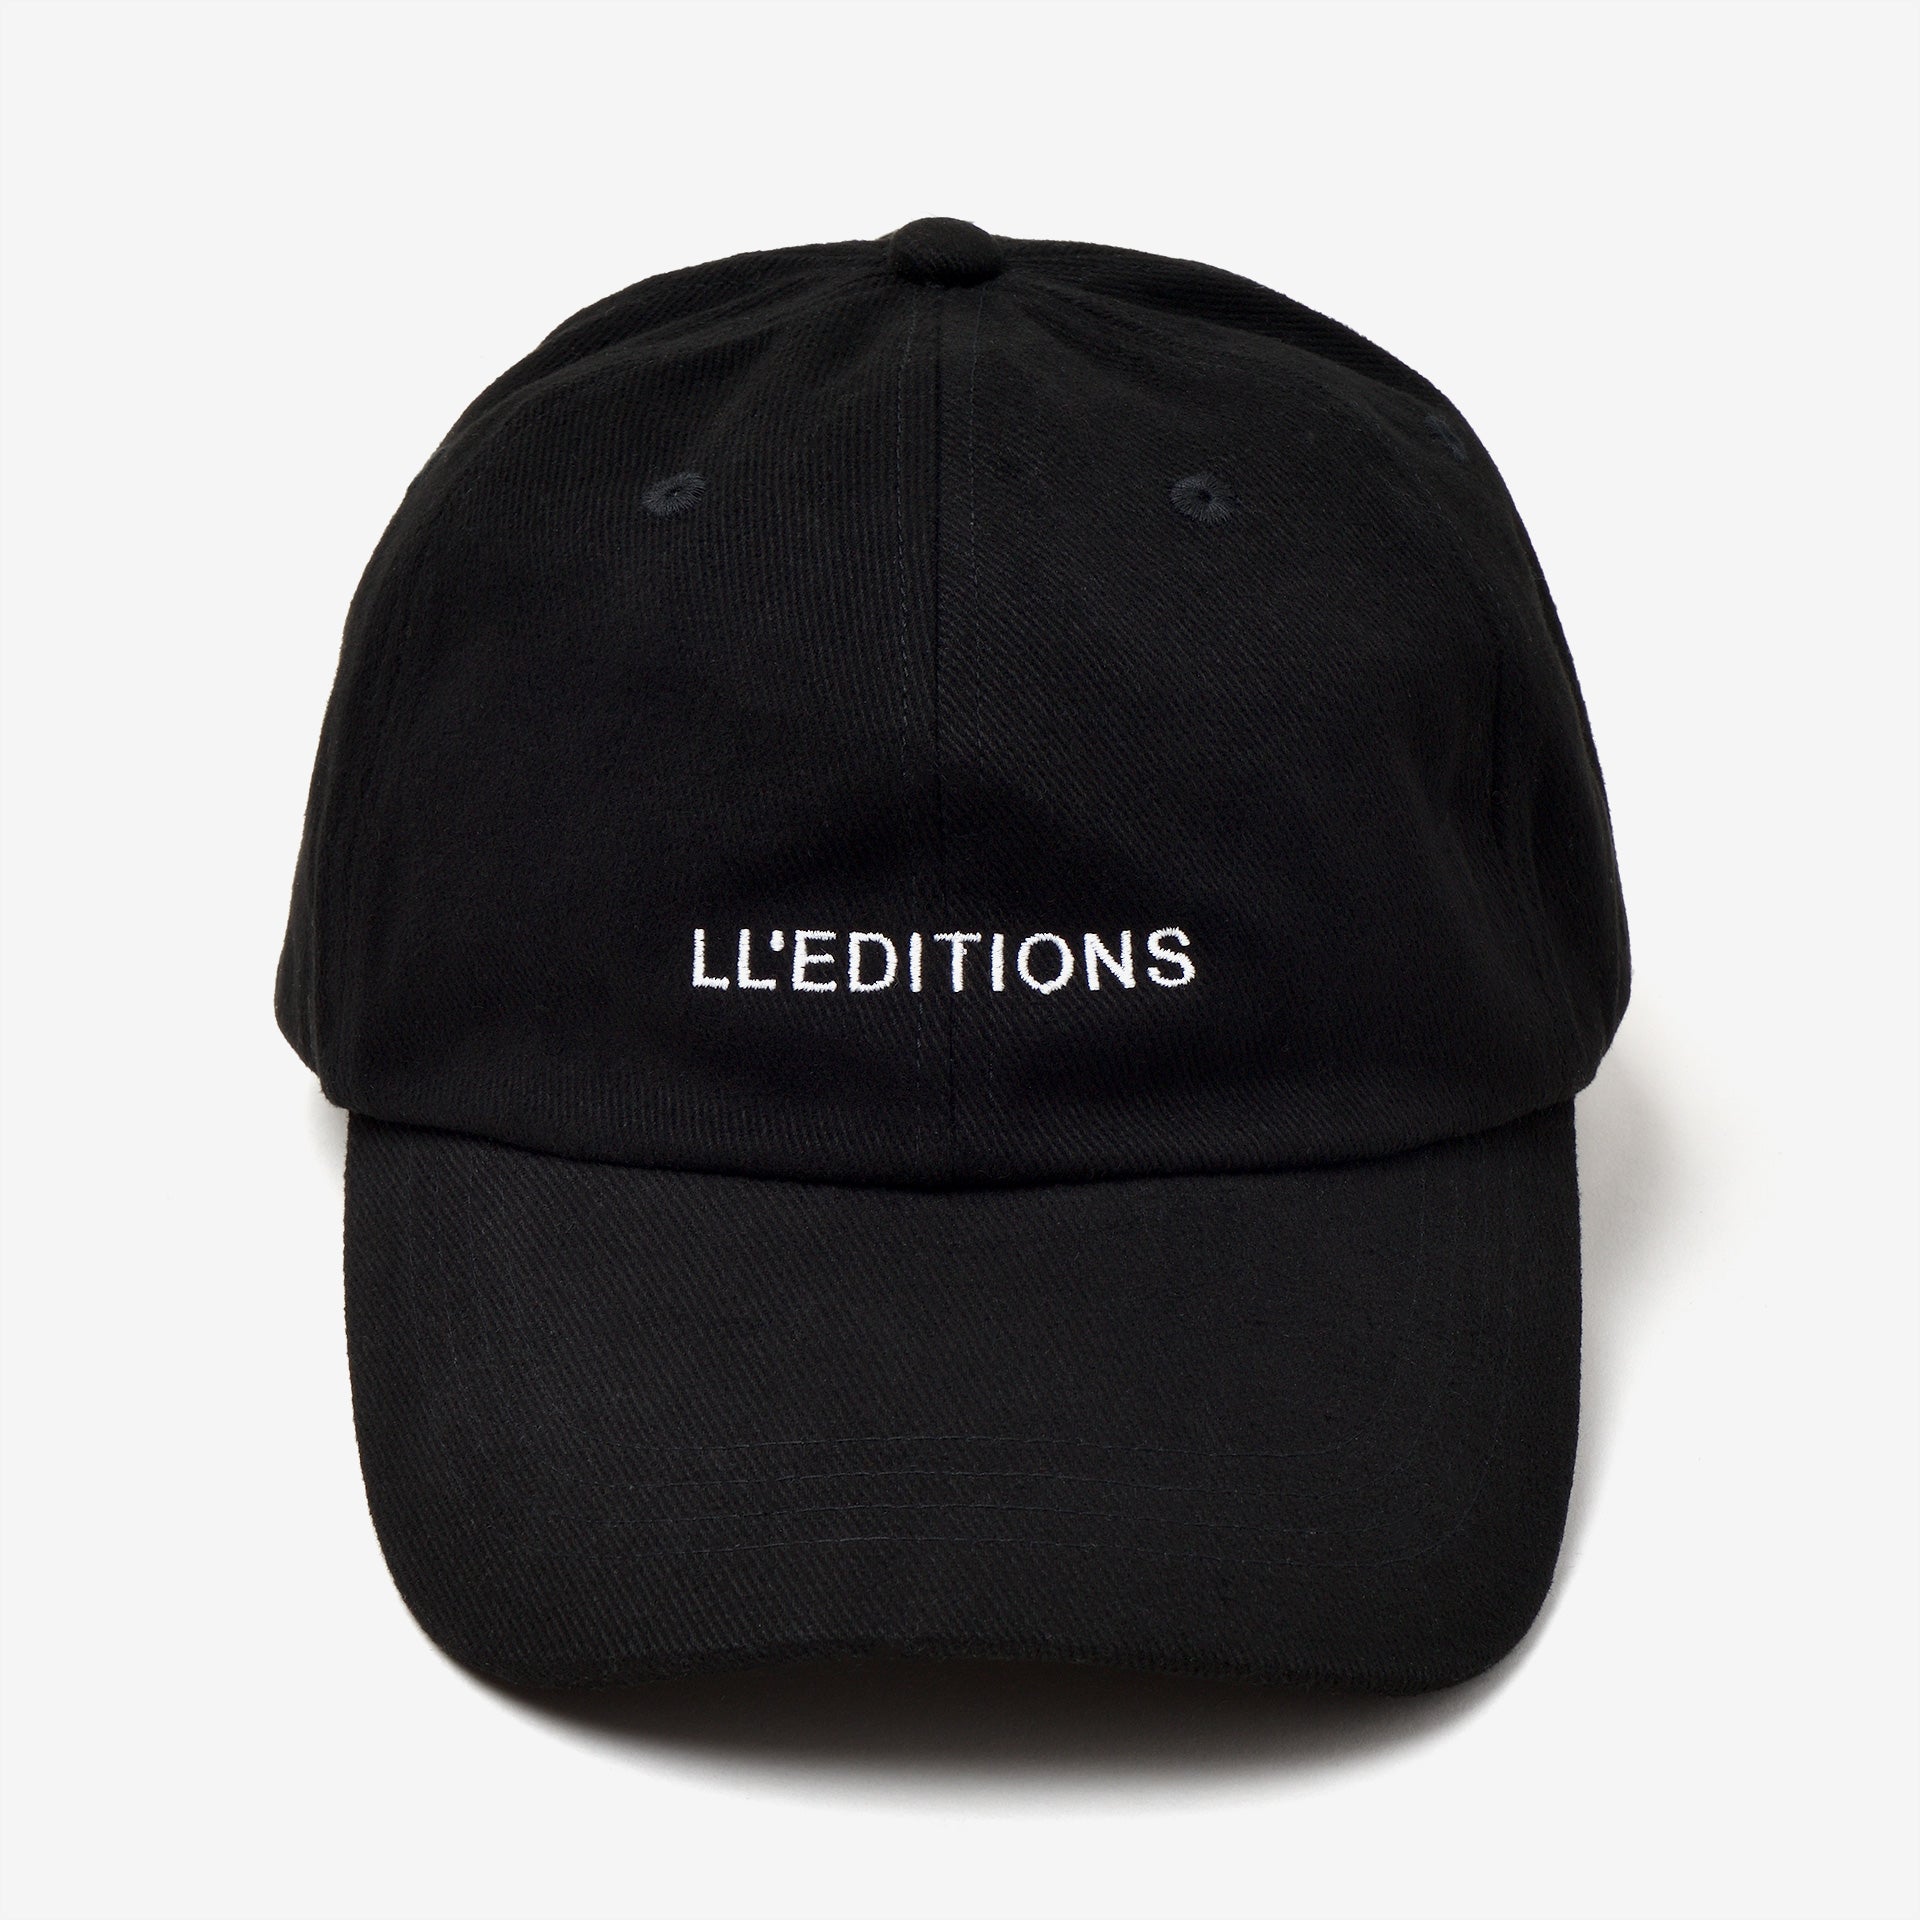 LL’Editions Standard Cap (Black / White)